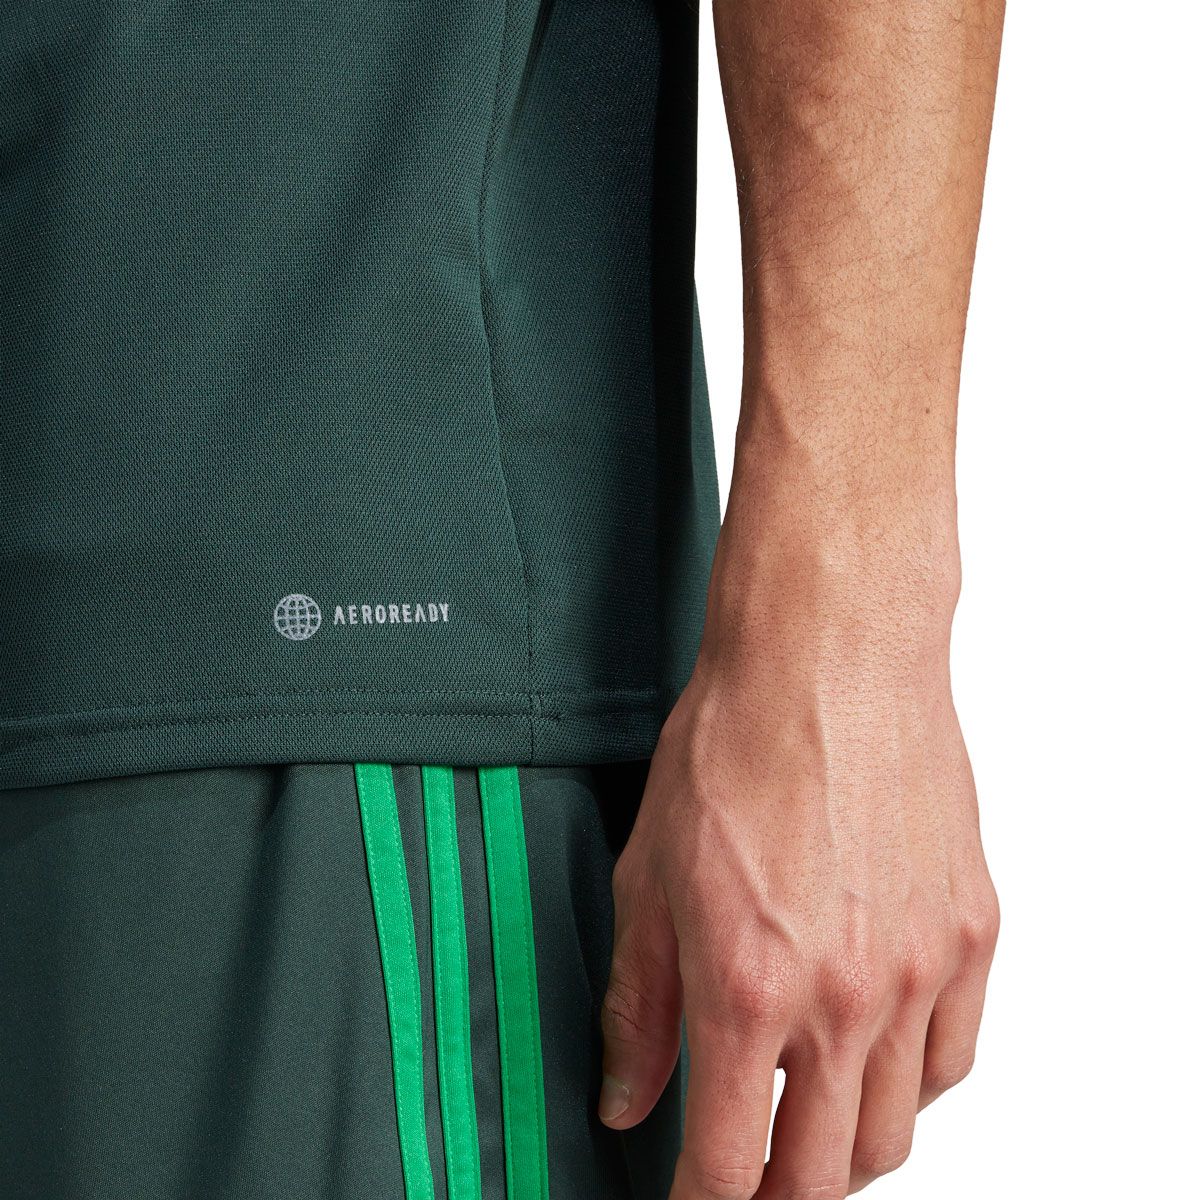 Celtic FC 2022/23 adidas Away Kit - FOOTBALL FASHION